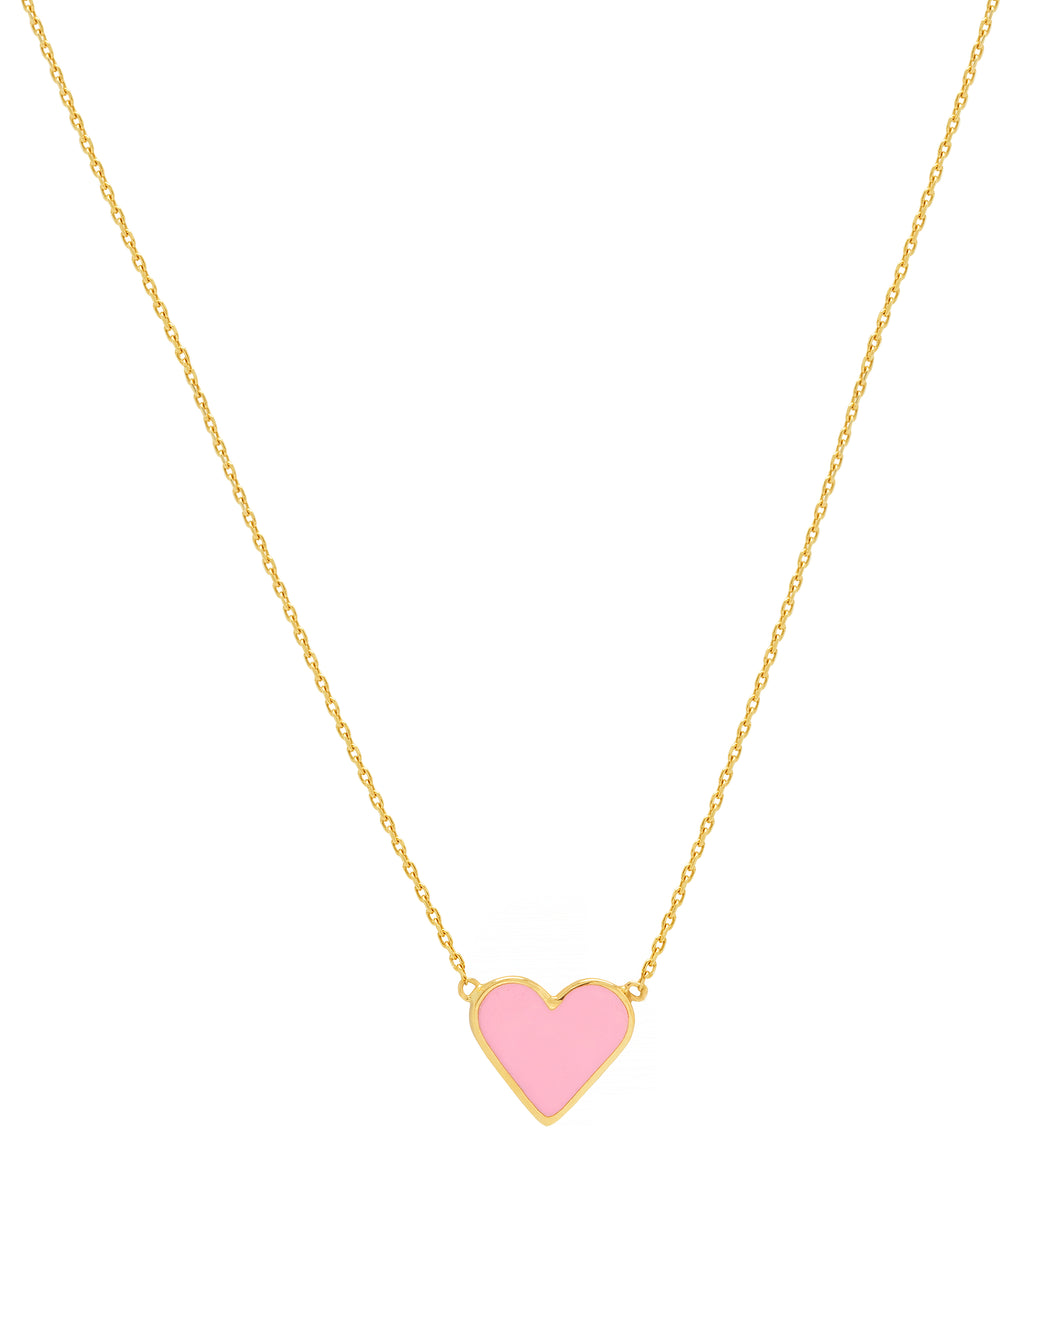 LRJC Enameled Heart Necklace 18K Gold - Pink